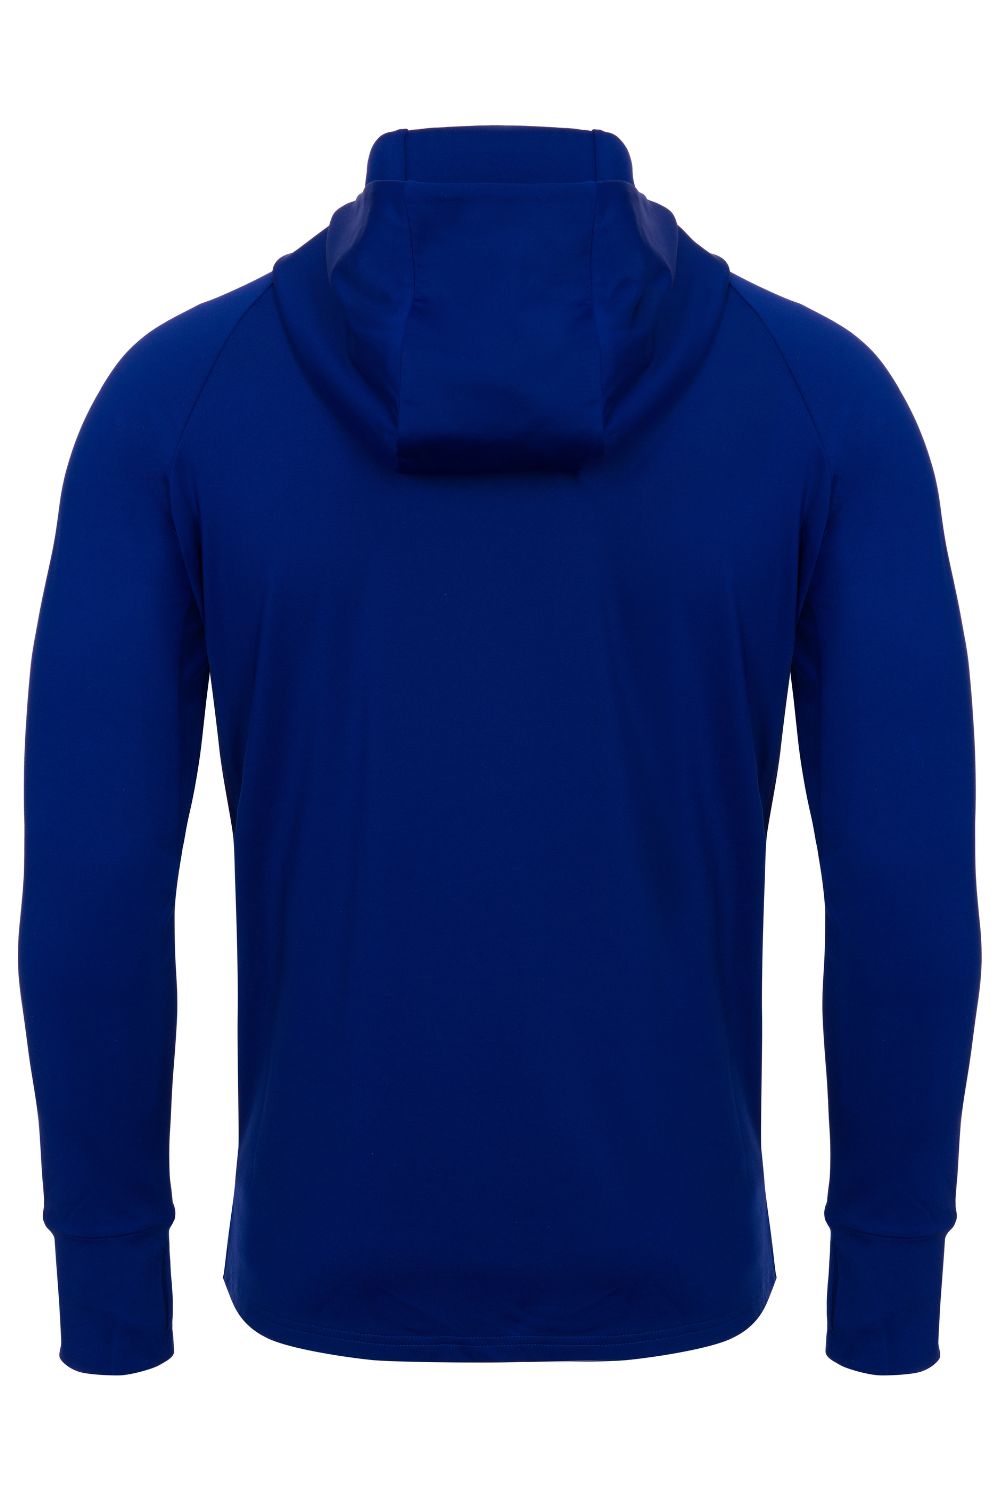 The H20 Hoodie (Men's/Blue) | Mid-layer Tops | Crewroom